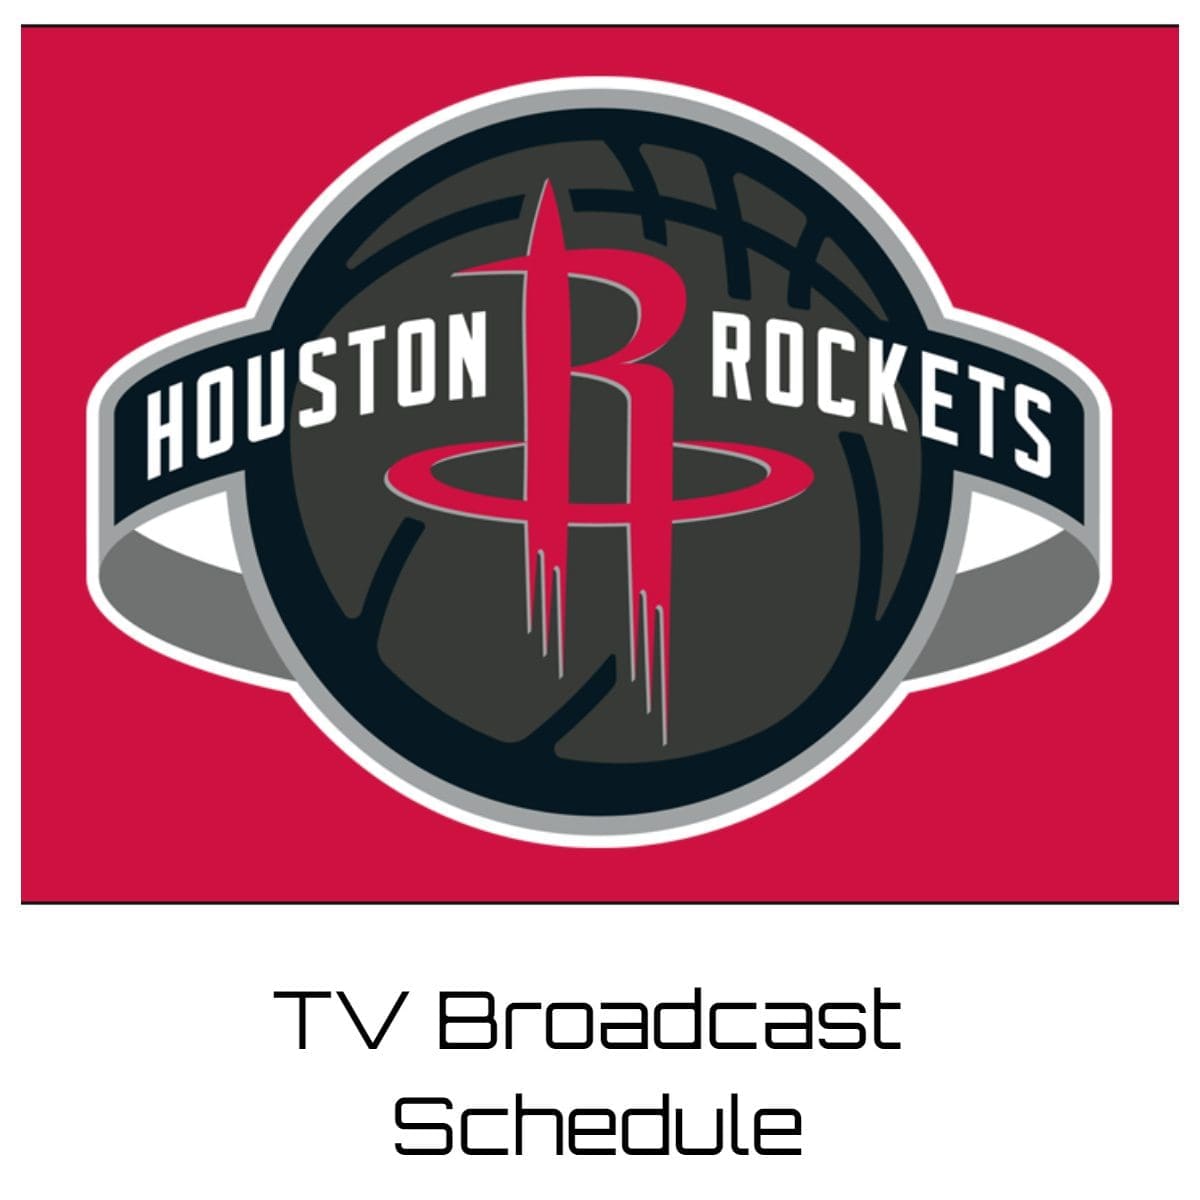 Houston Rockets TV Broadcast Schedule